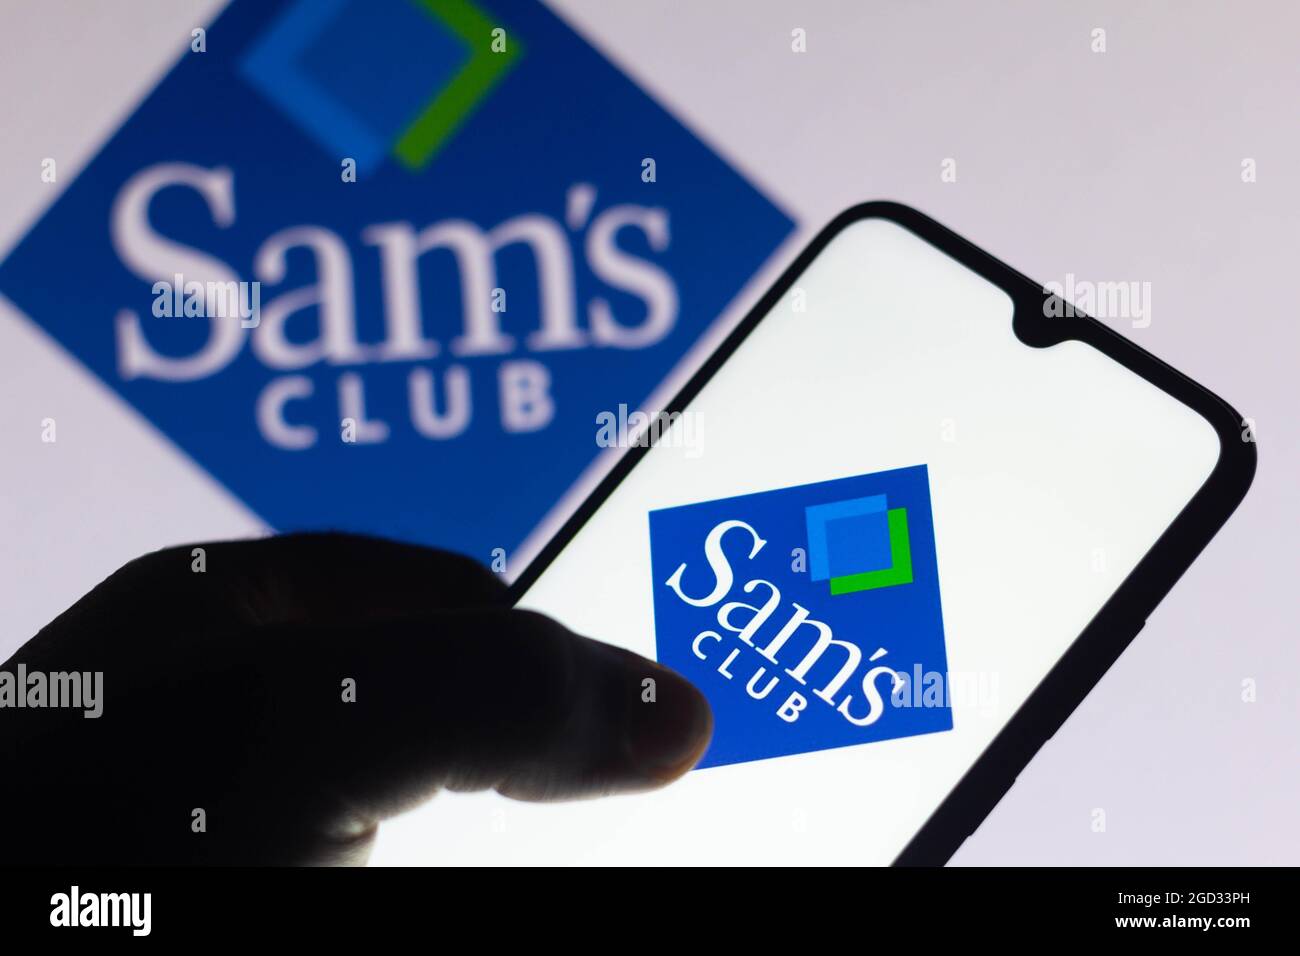 Sams club logo fotografías e imágenes de alta resolución - Alamy